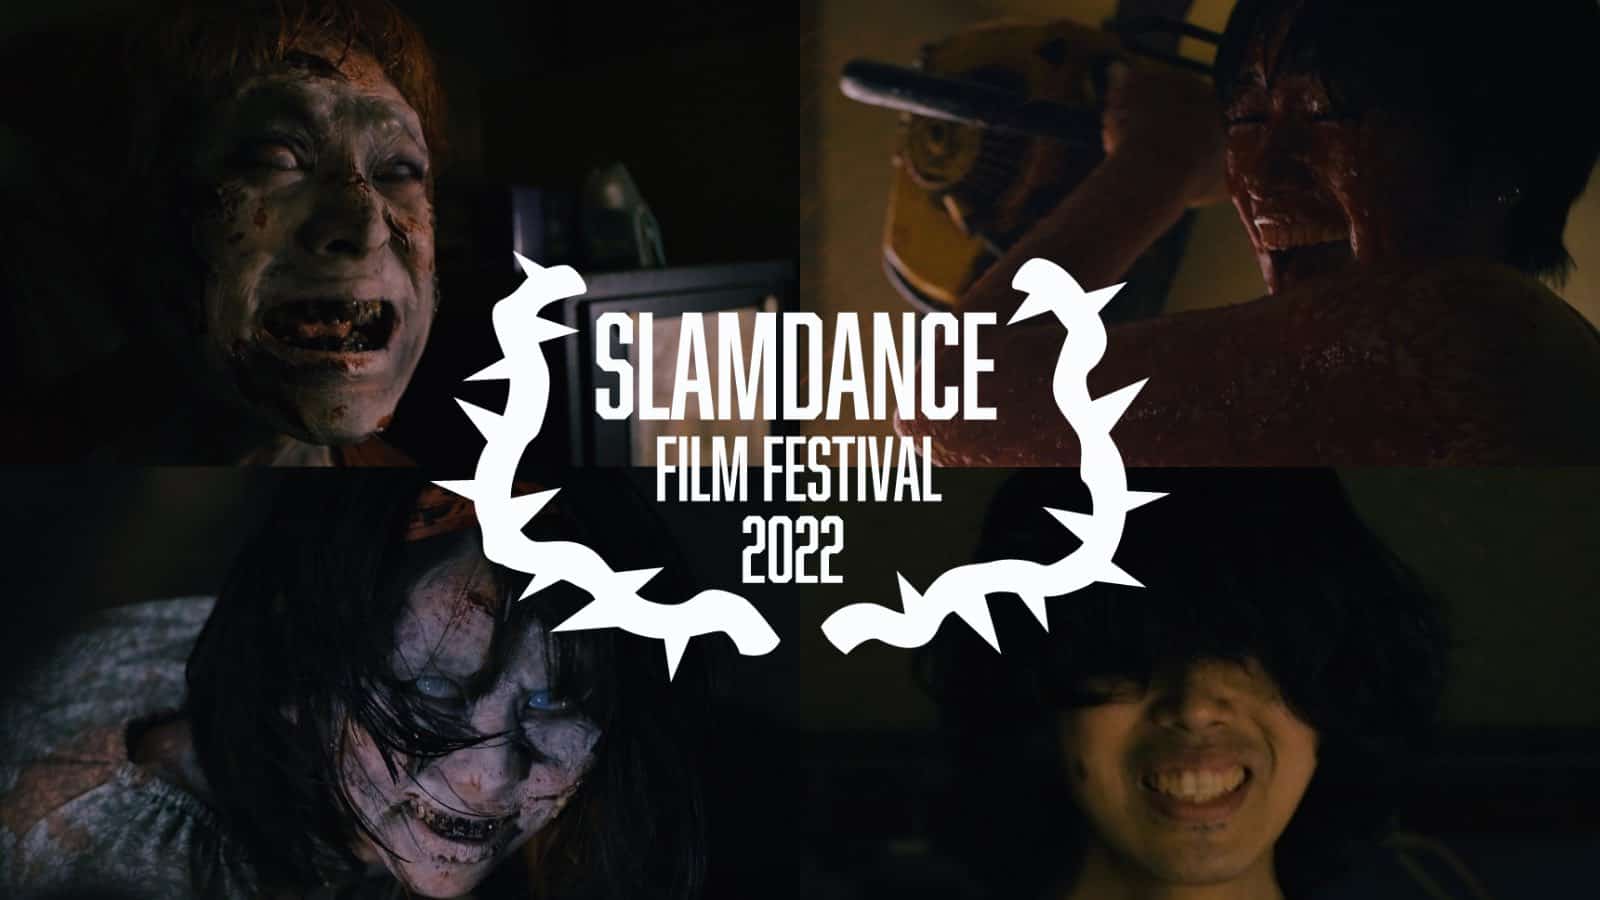 Joseph’s Slamdance Film Festival Shorts Reviews: Visitors, CD-Trip, and Scarlet Red